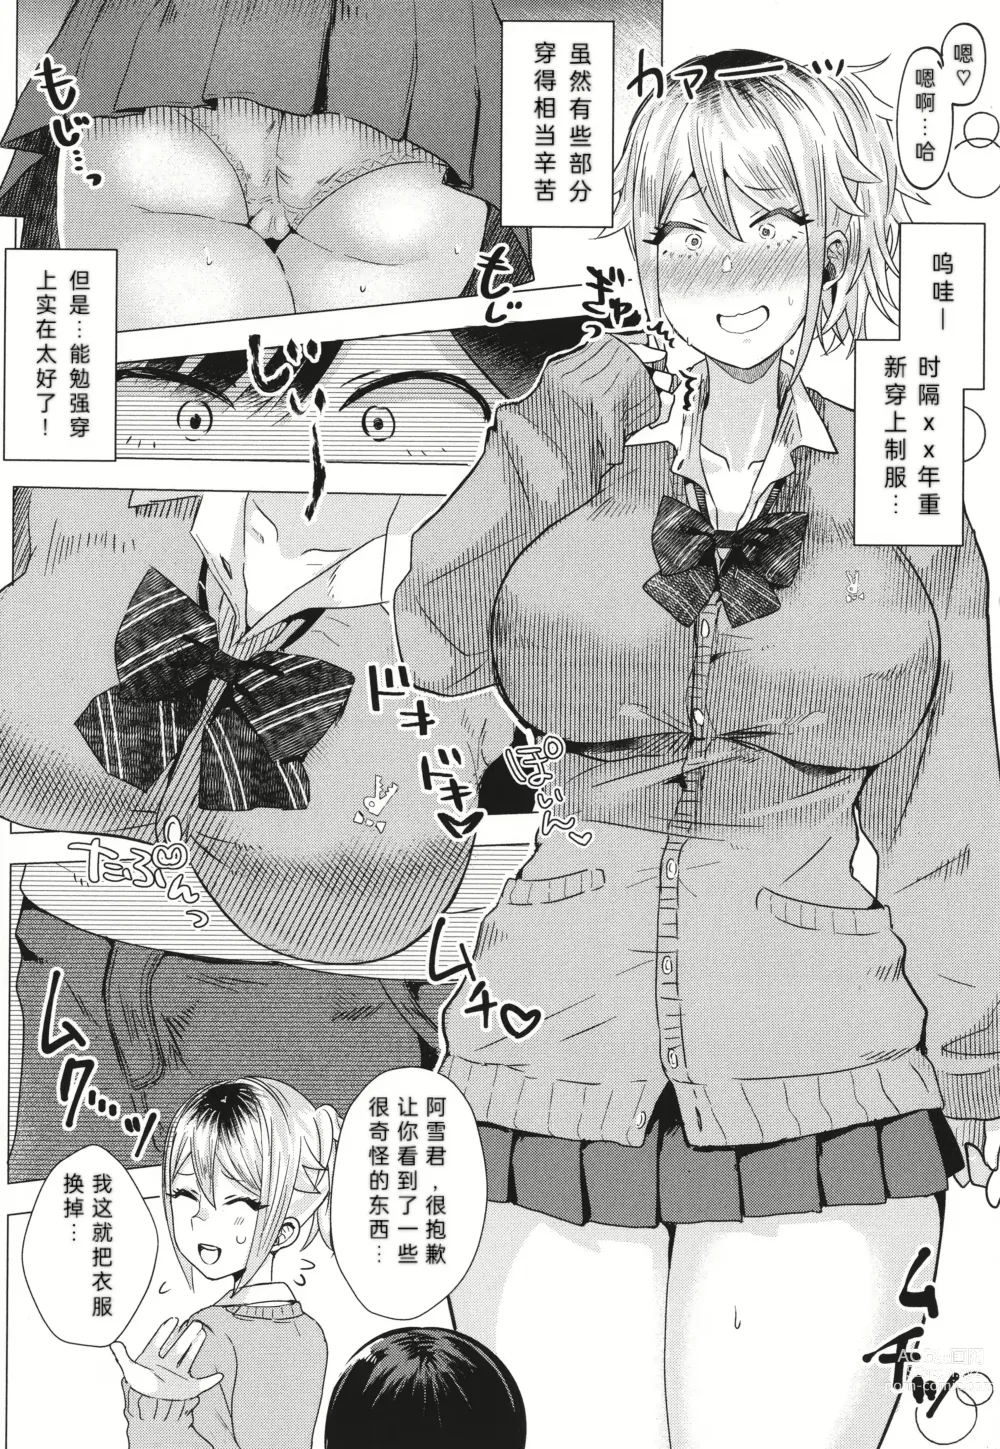 Page 6 of manga 被突然袭击的辣妹母亲